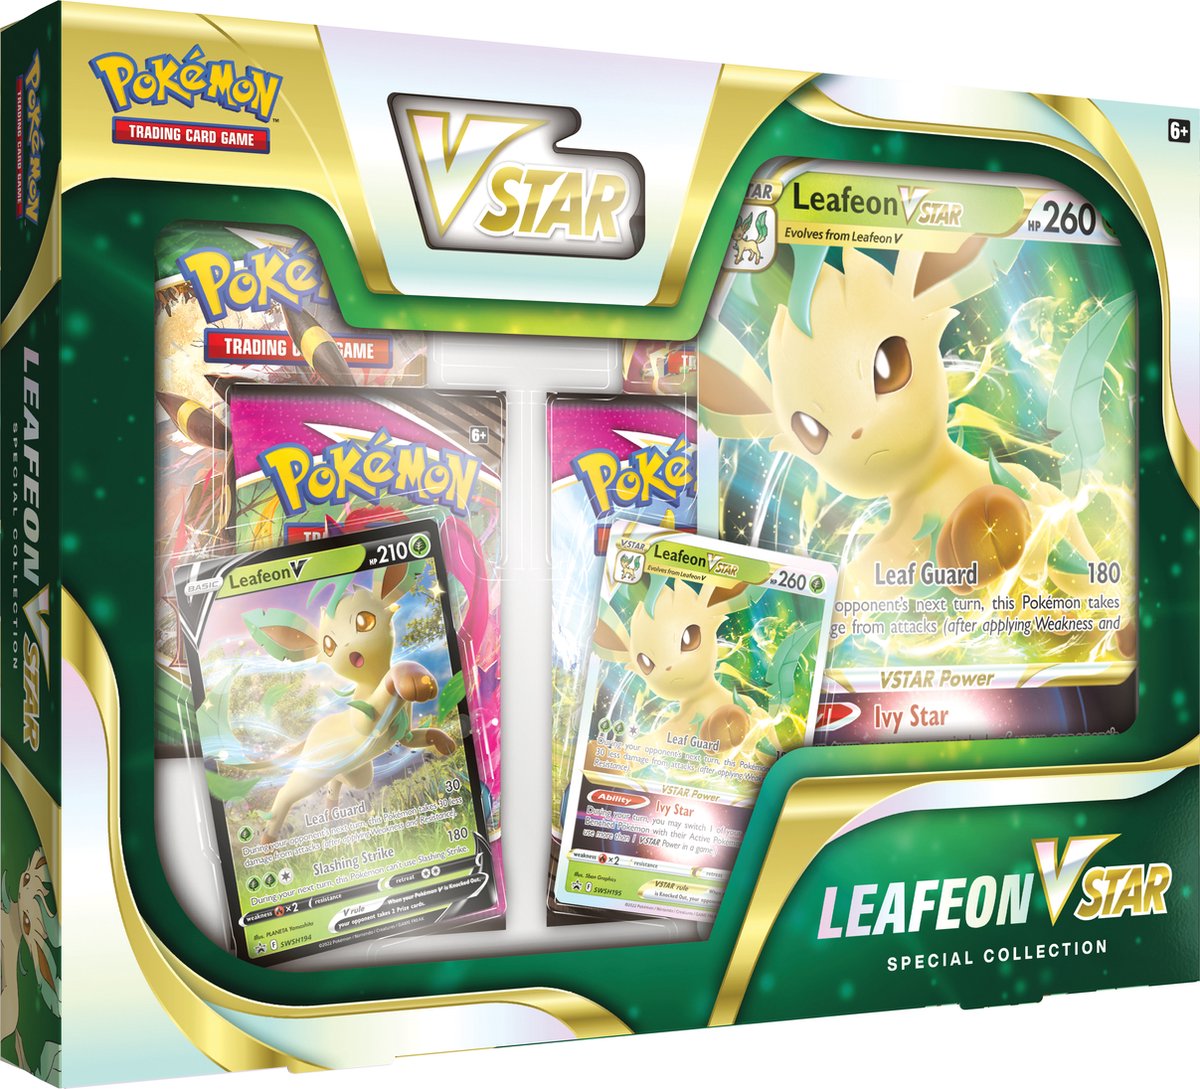 Pokemon VSTAR Special Collection - Leafeon VSTAR (Pokemon), The Pokemon Company